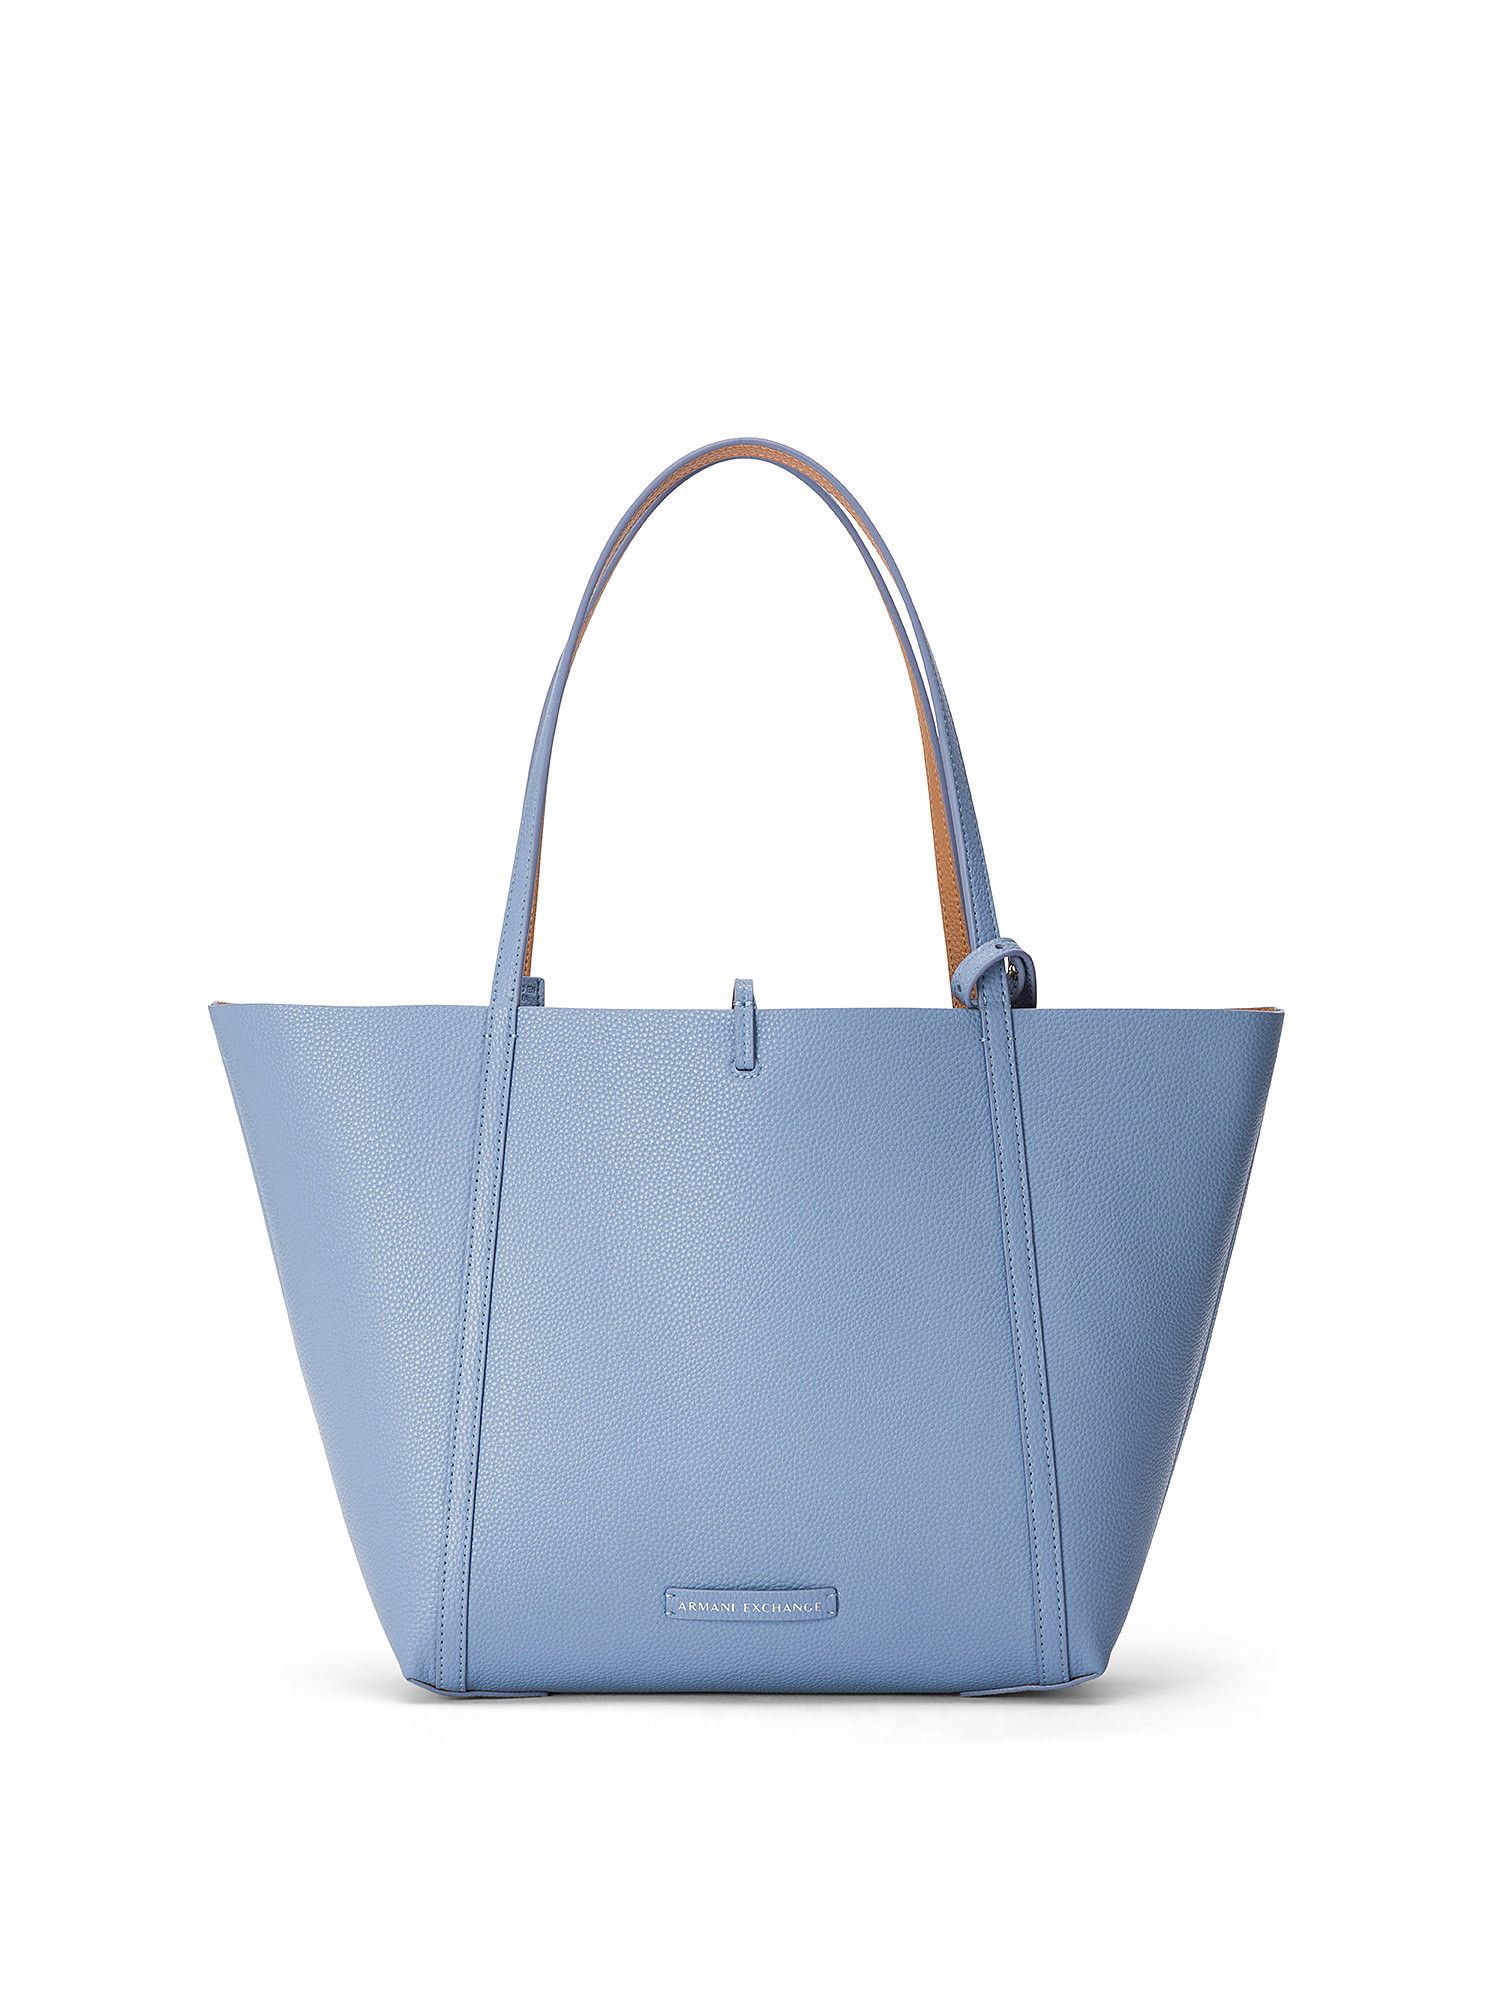 Armani Exchange - Reversible tote bag with logo, Light Blue, large image number 0